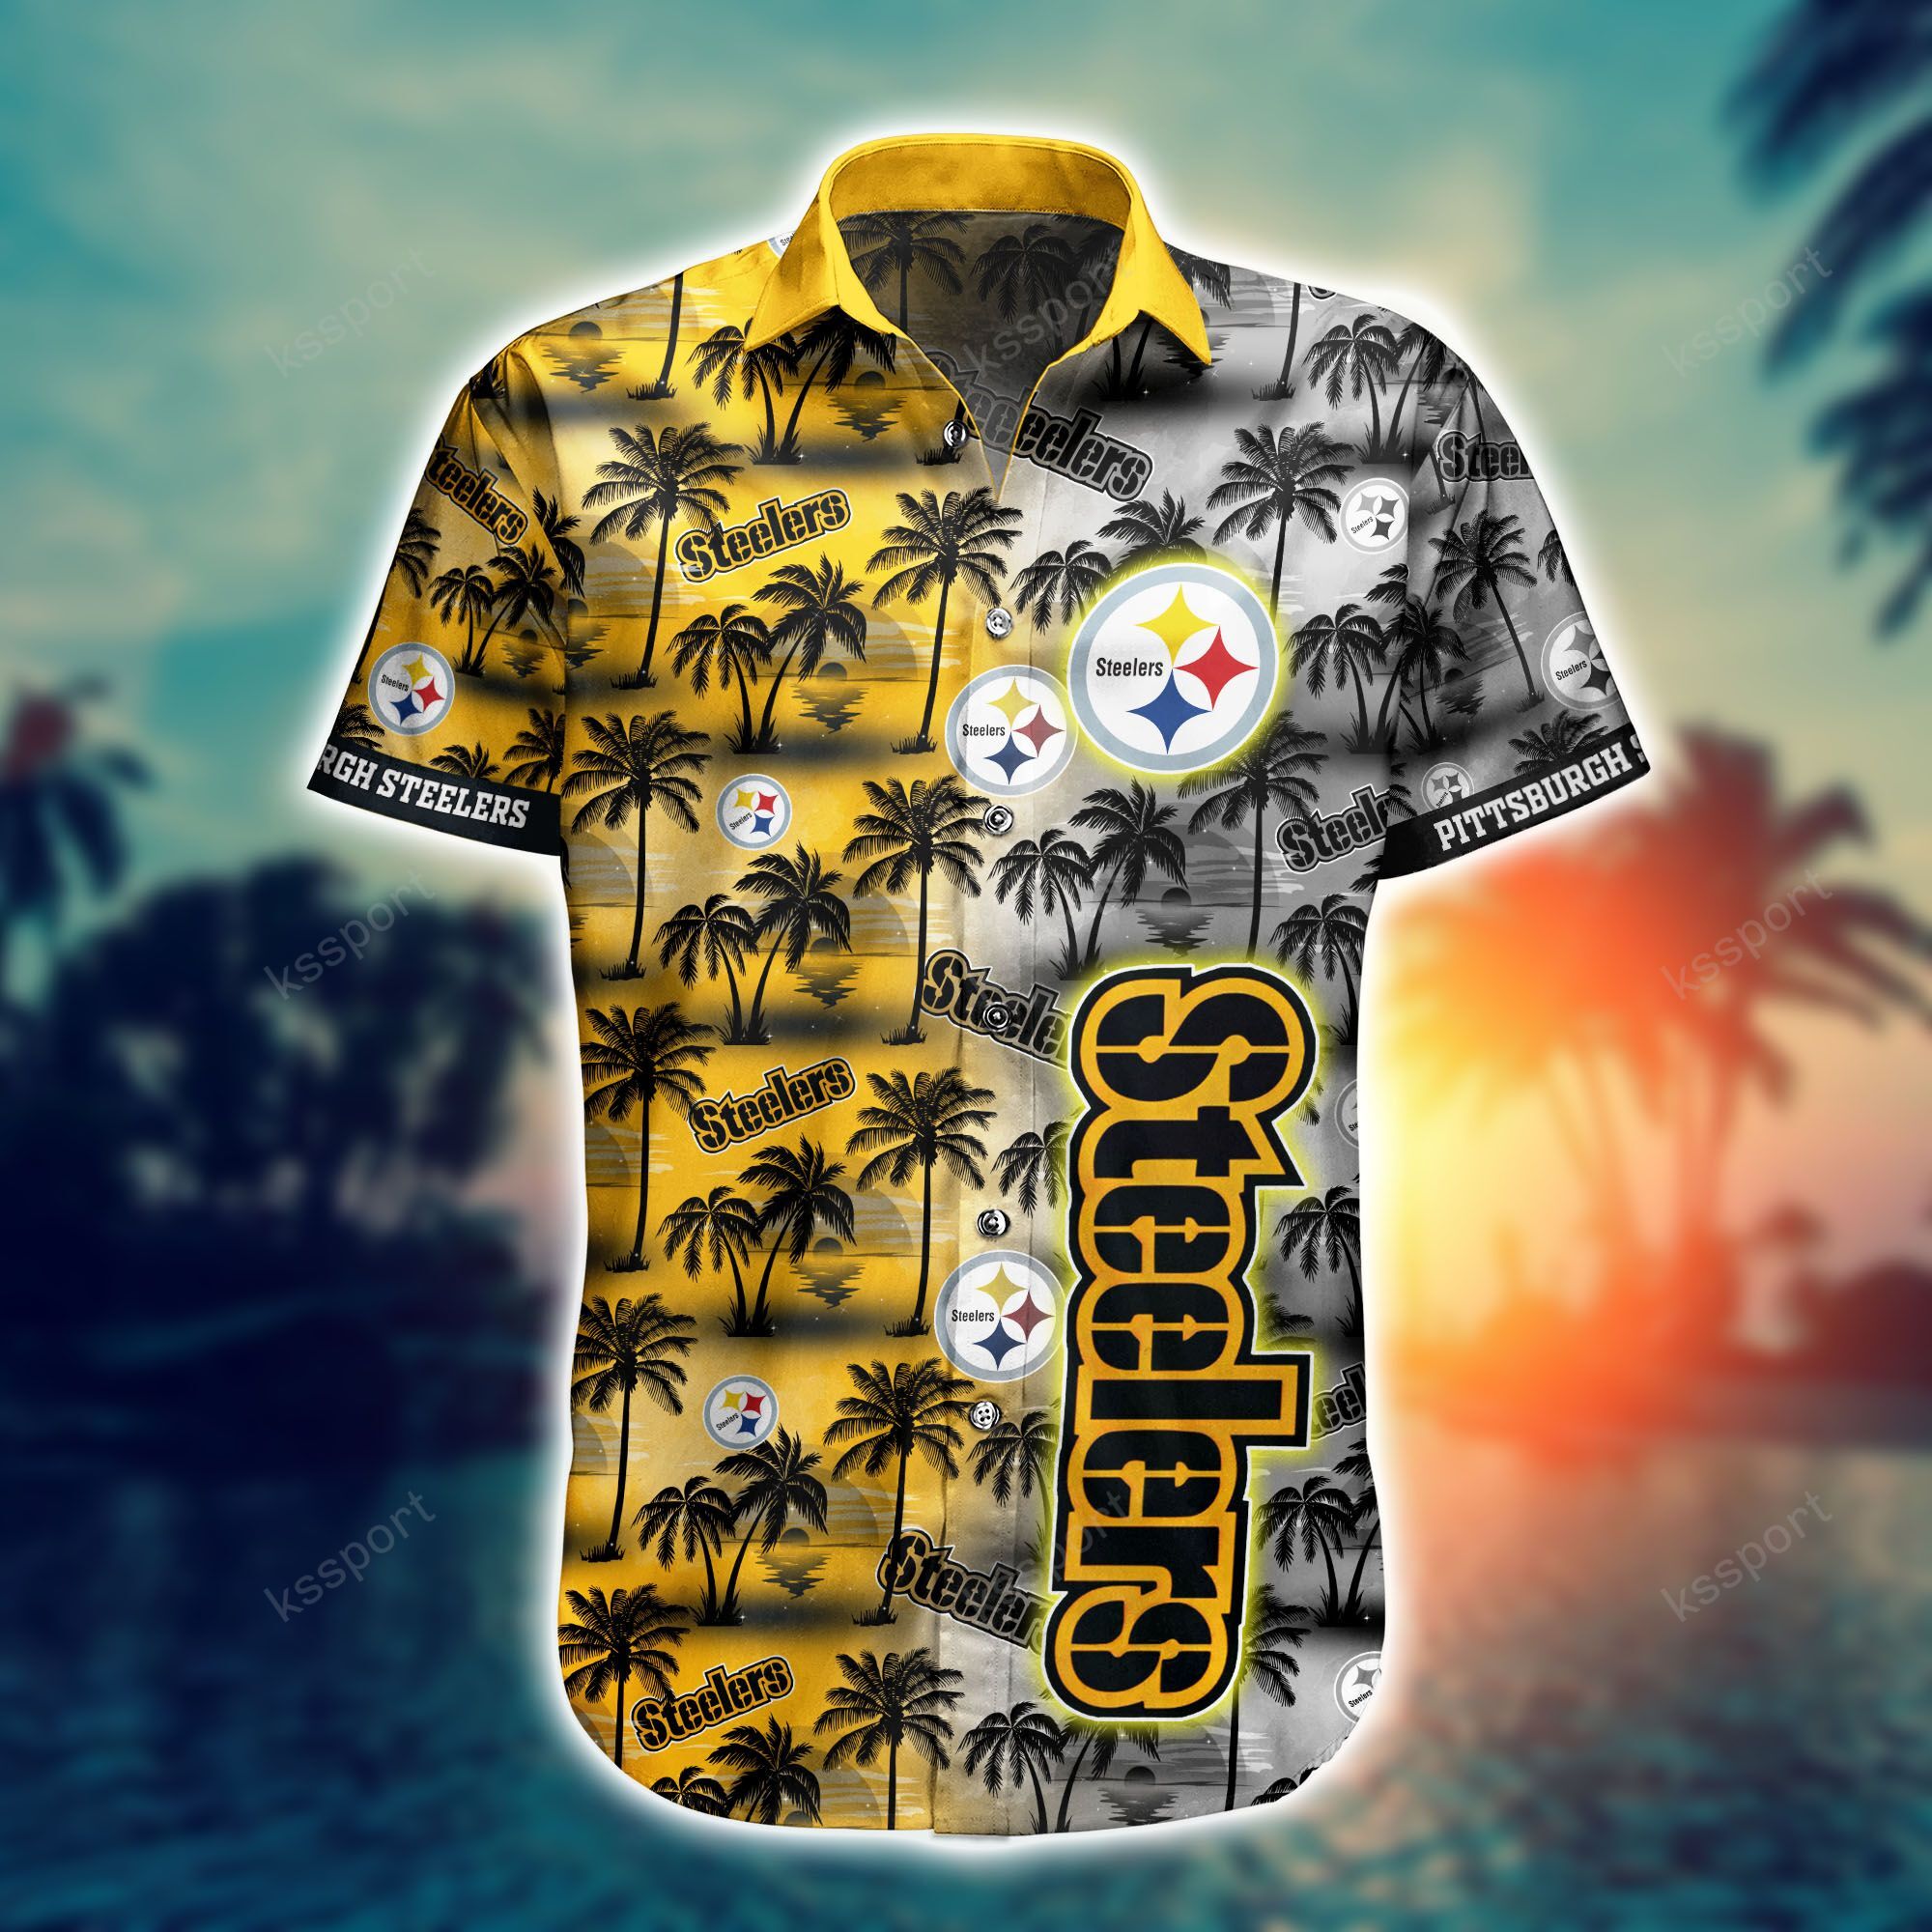 Hawaiian shirt and shorts is a great way to look stylish at a beach party 29